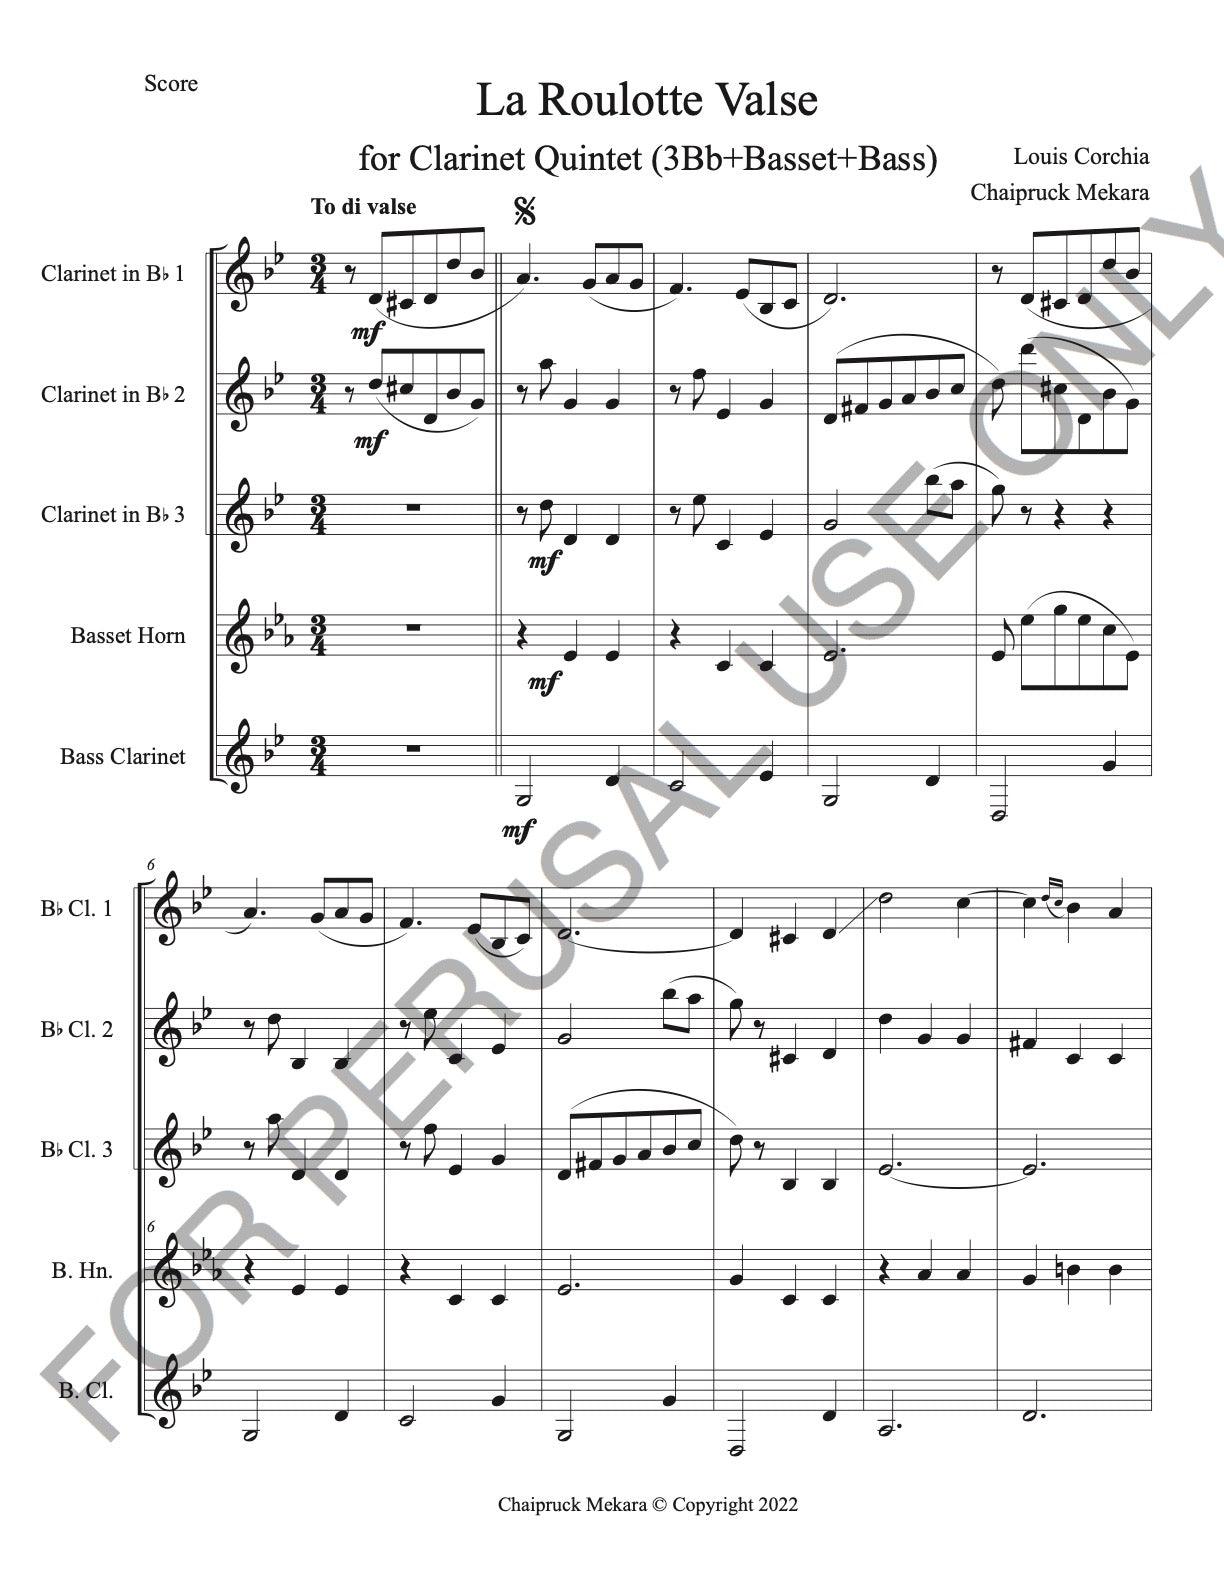 Clarinet Quintet sheet music (3Bb+Basset+Bass): La Roulotte Valse by Louis Corchia - ChaipruckMekara